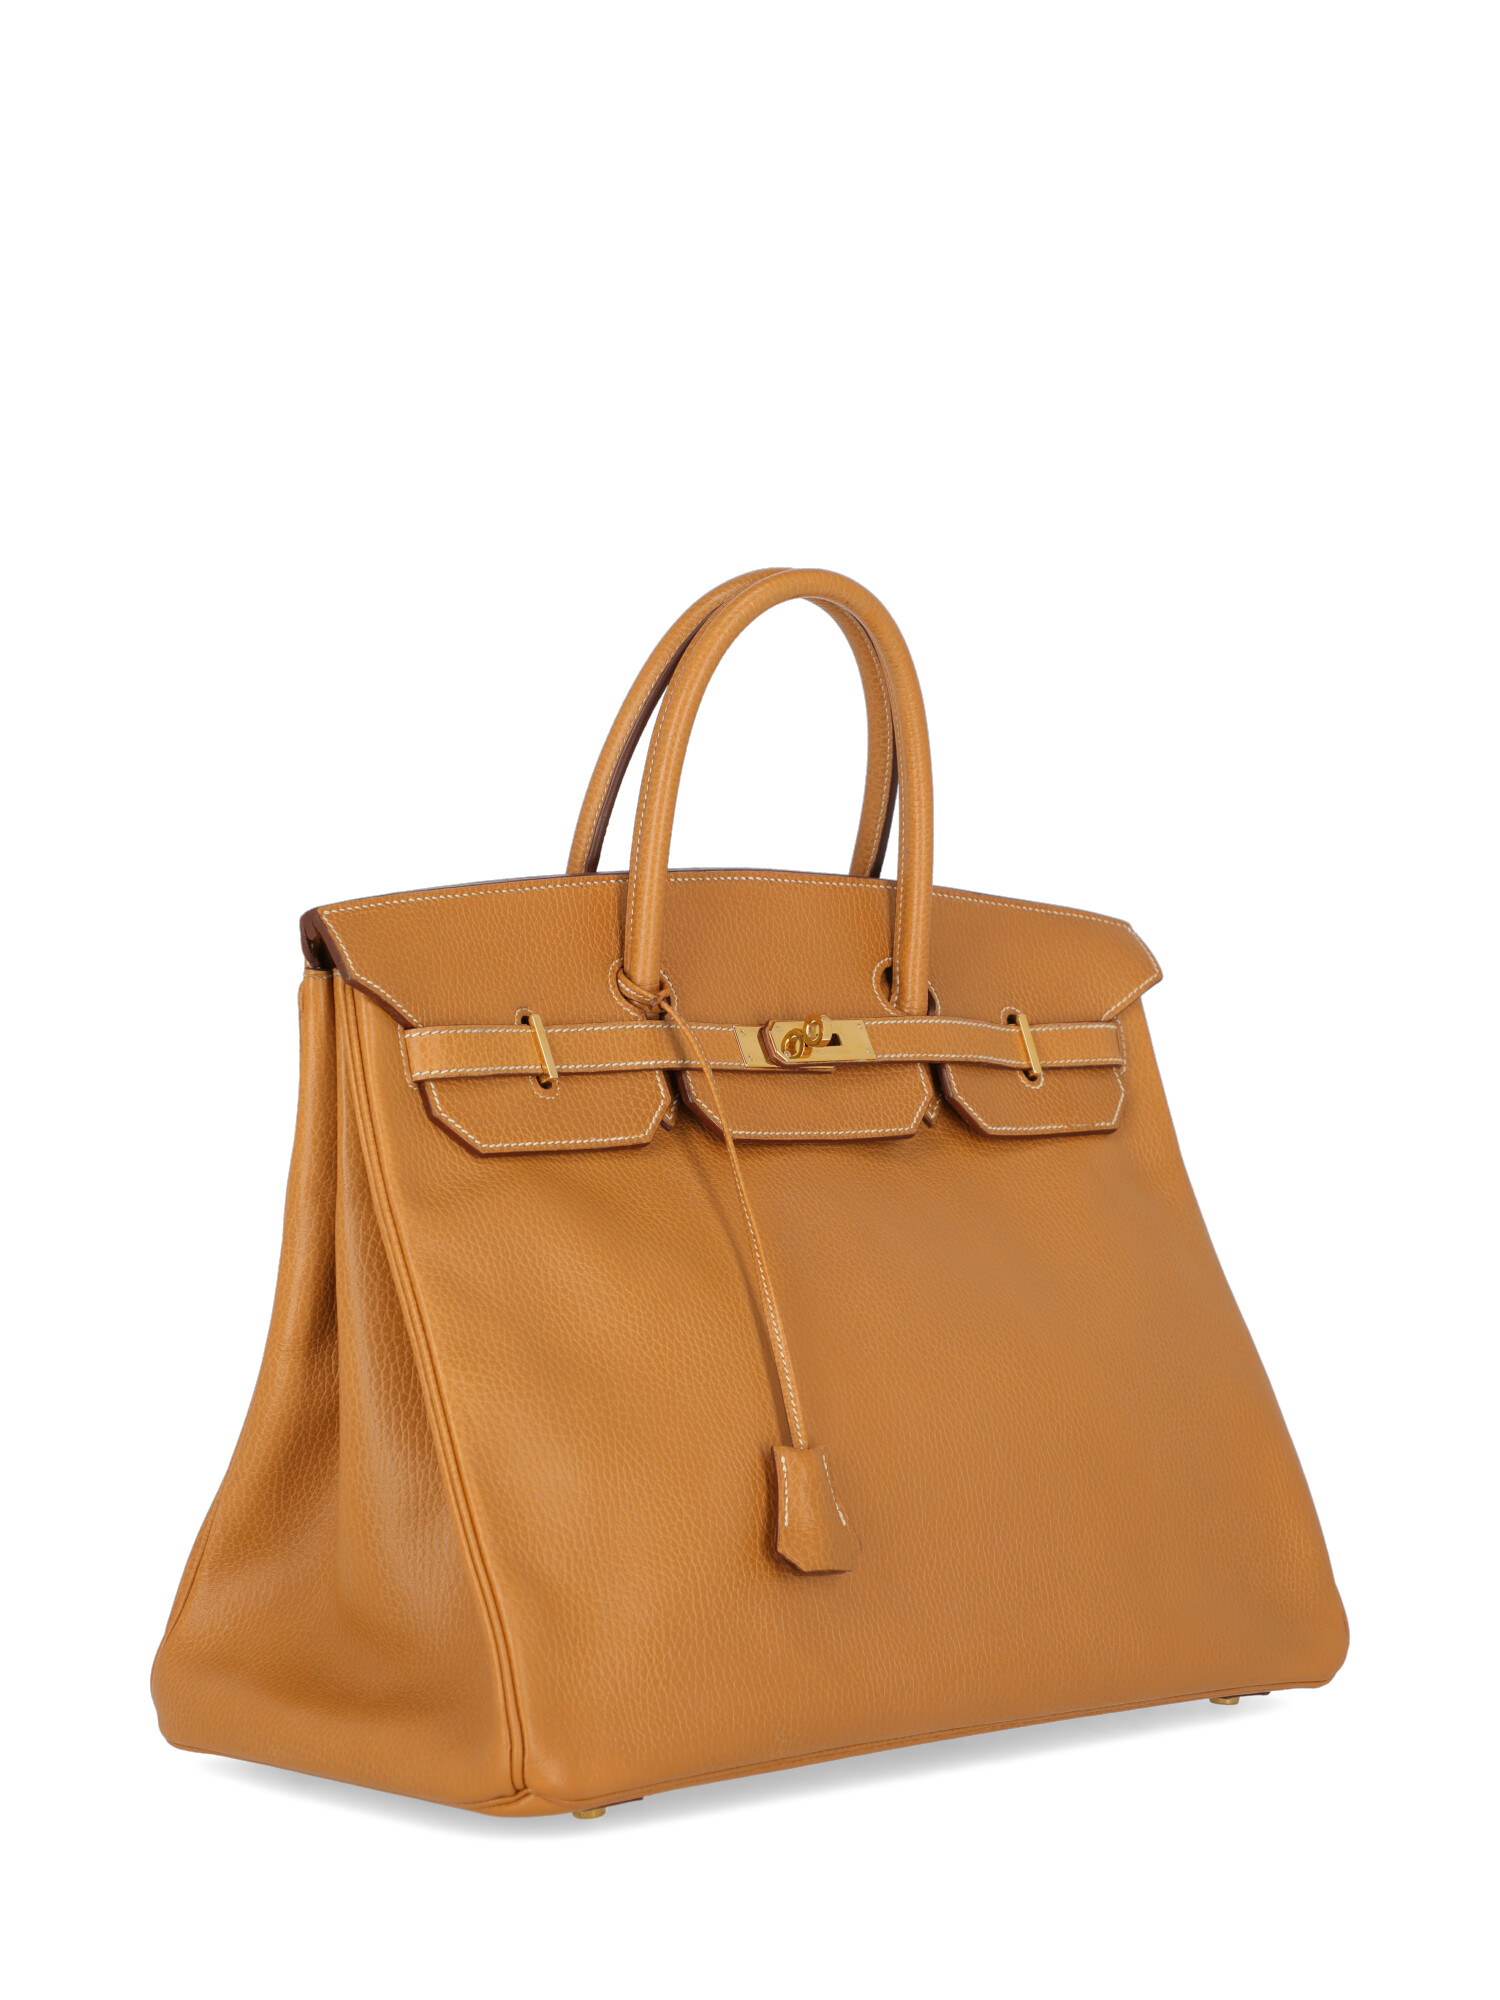 Hermes Special Price Women Handbags Birkin 40 Camel Color | eBay